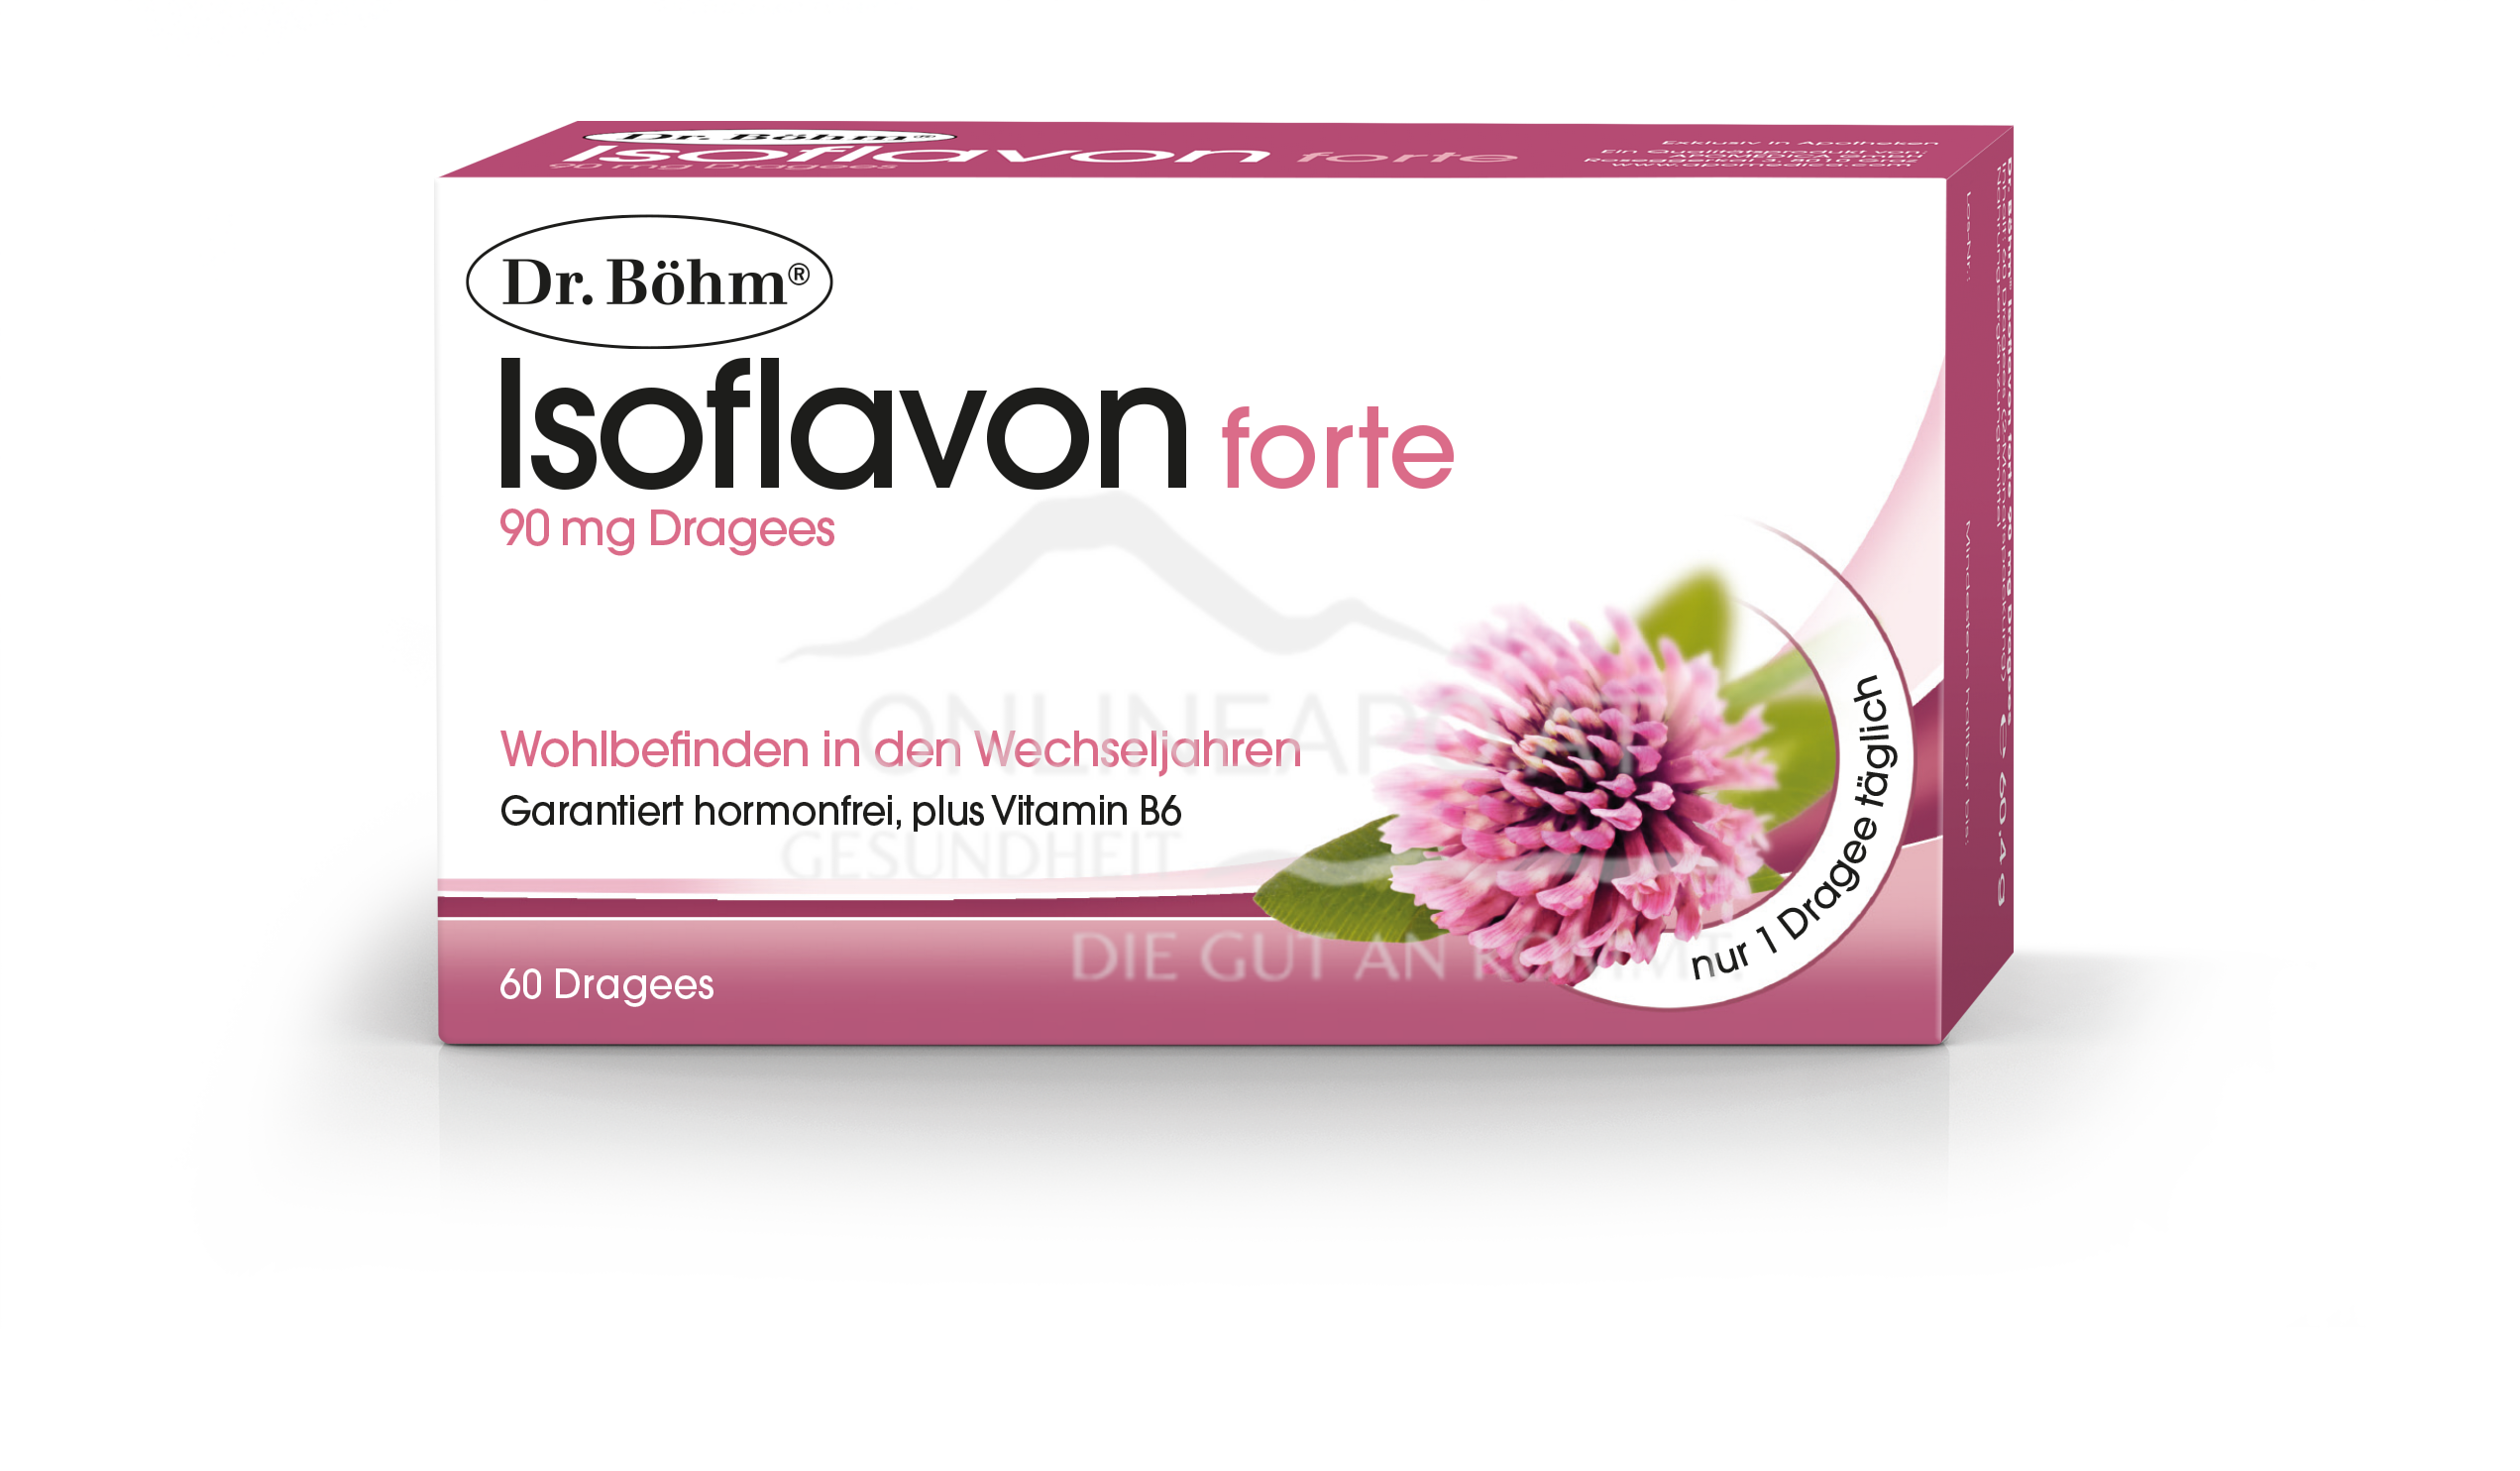 Dr. Böhm® Isoflavon forte 90mg